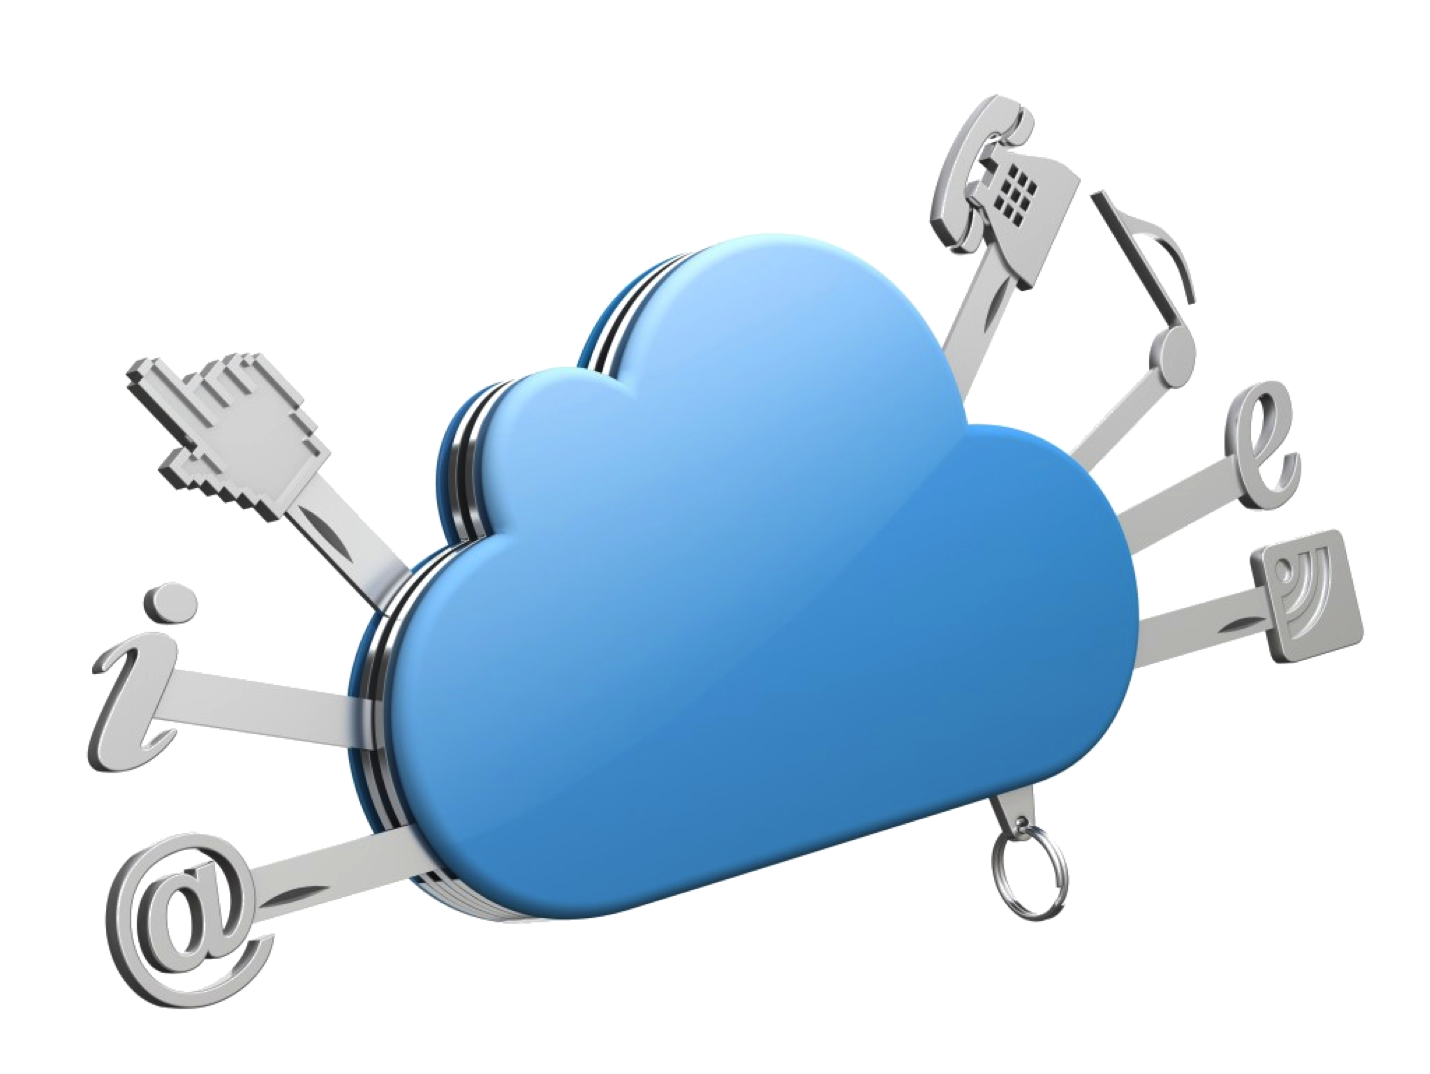 clipart cloud technology